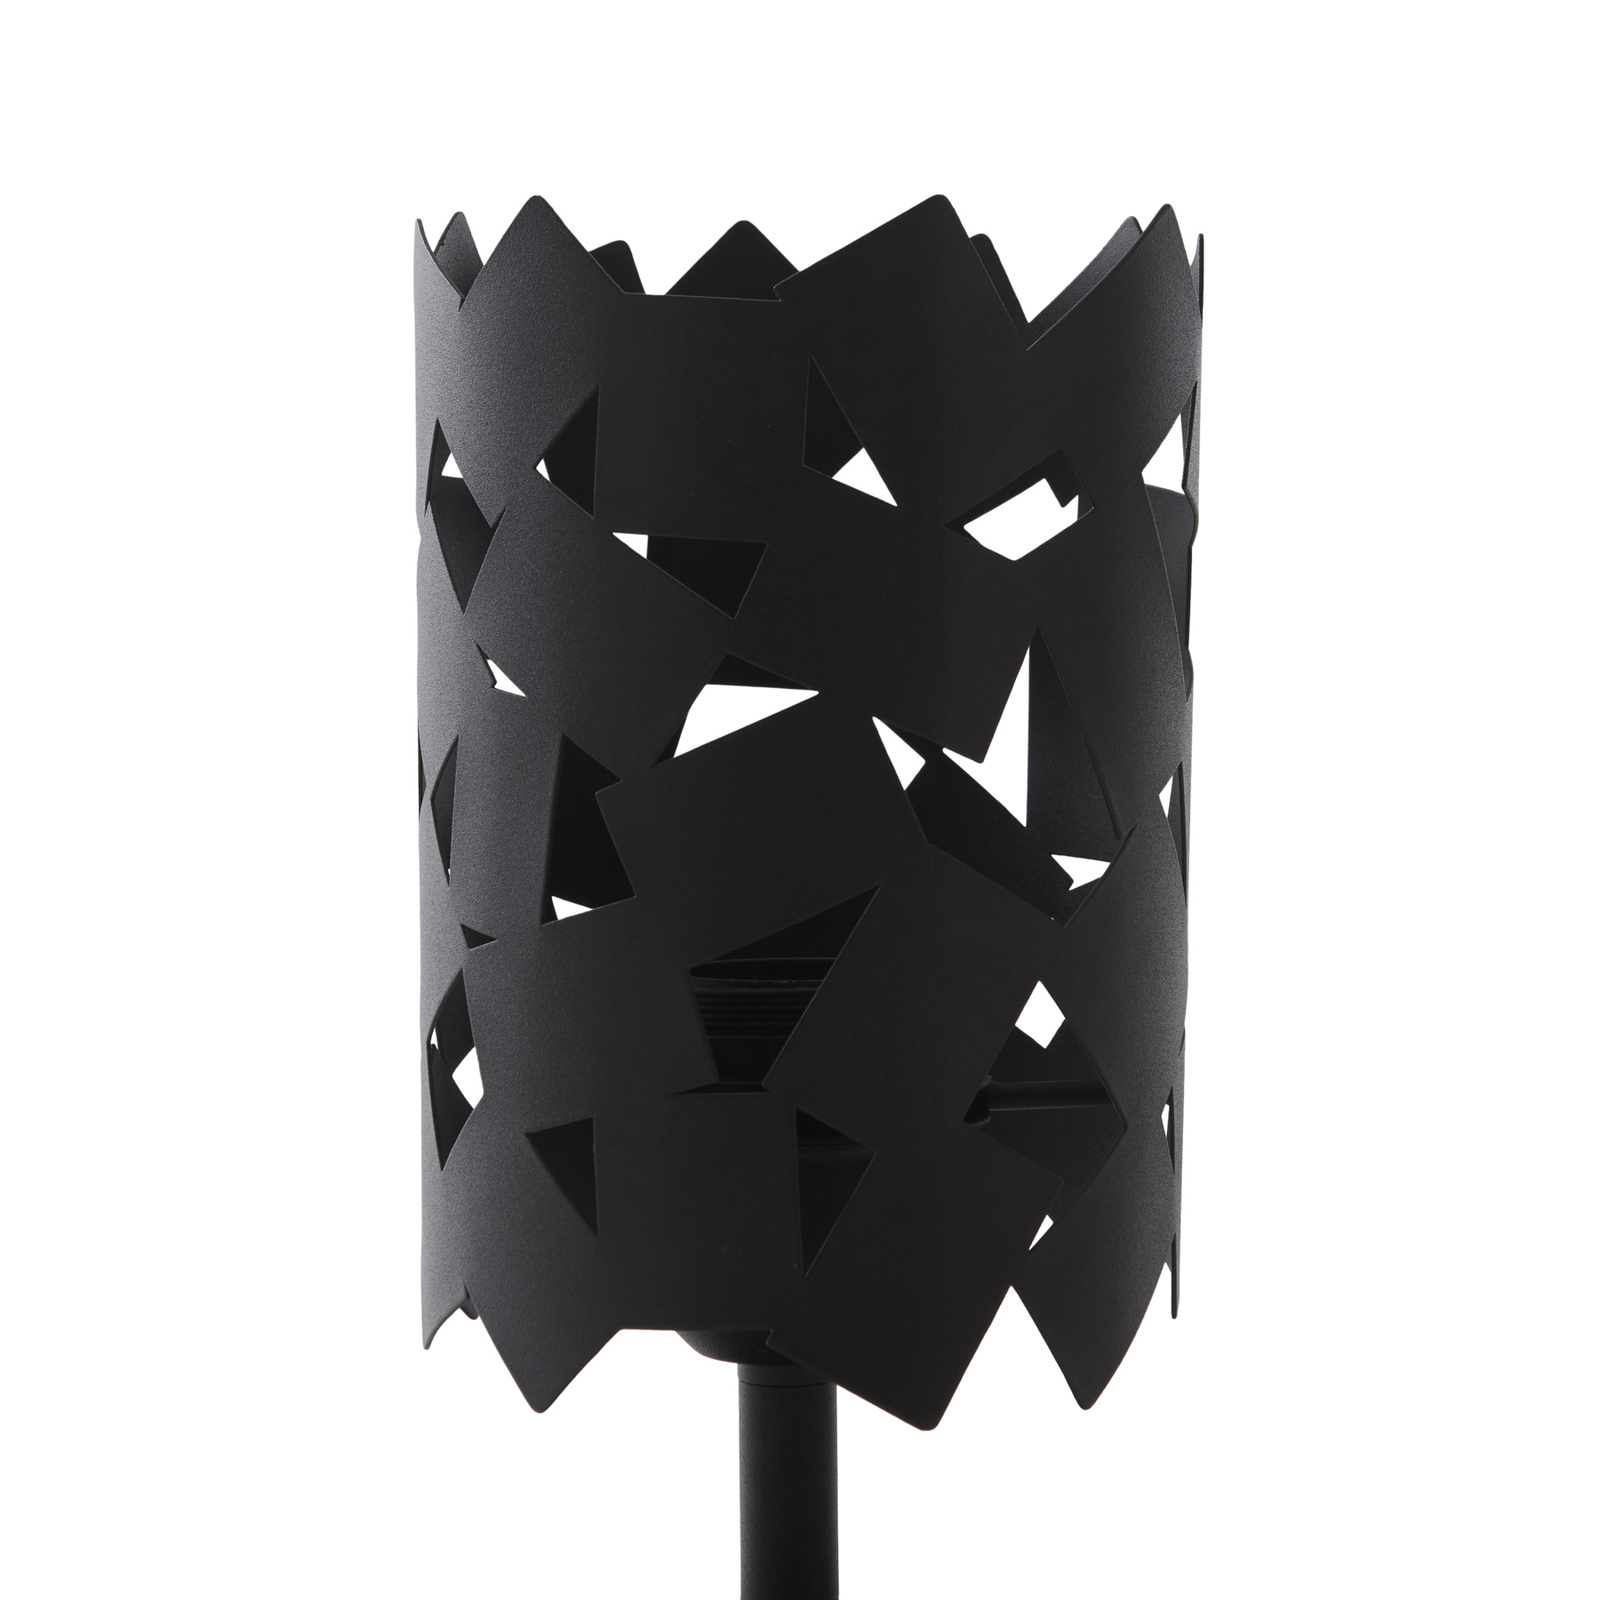 Lucande lampe à poser Aeloria, noir, fer, Ø 12 cm, E27